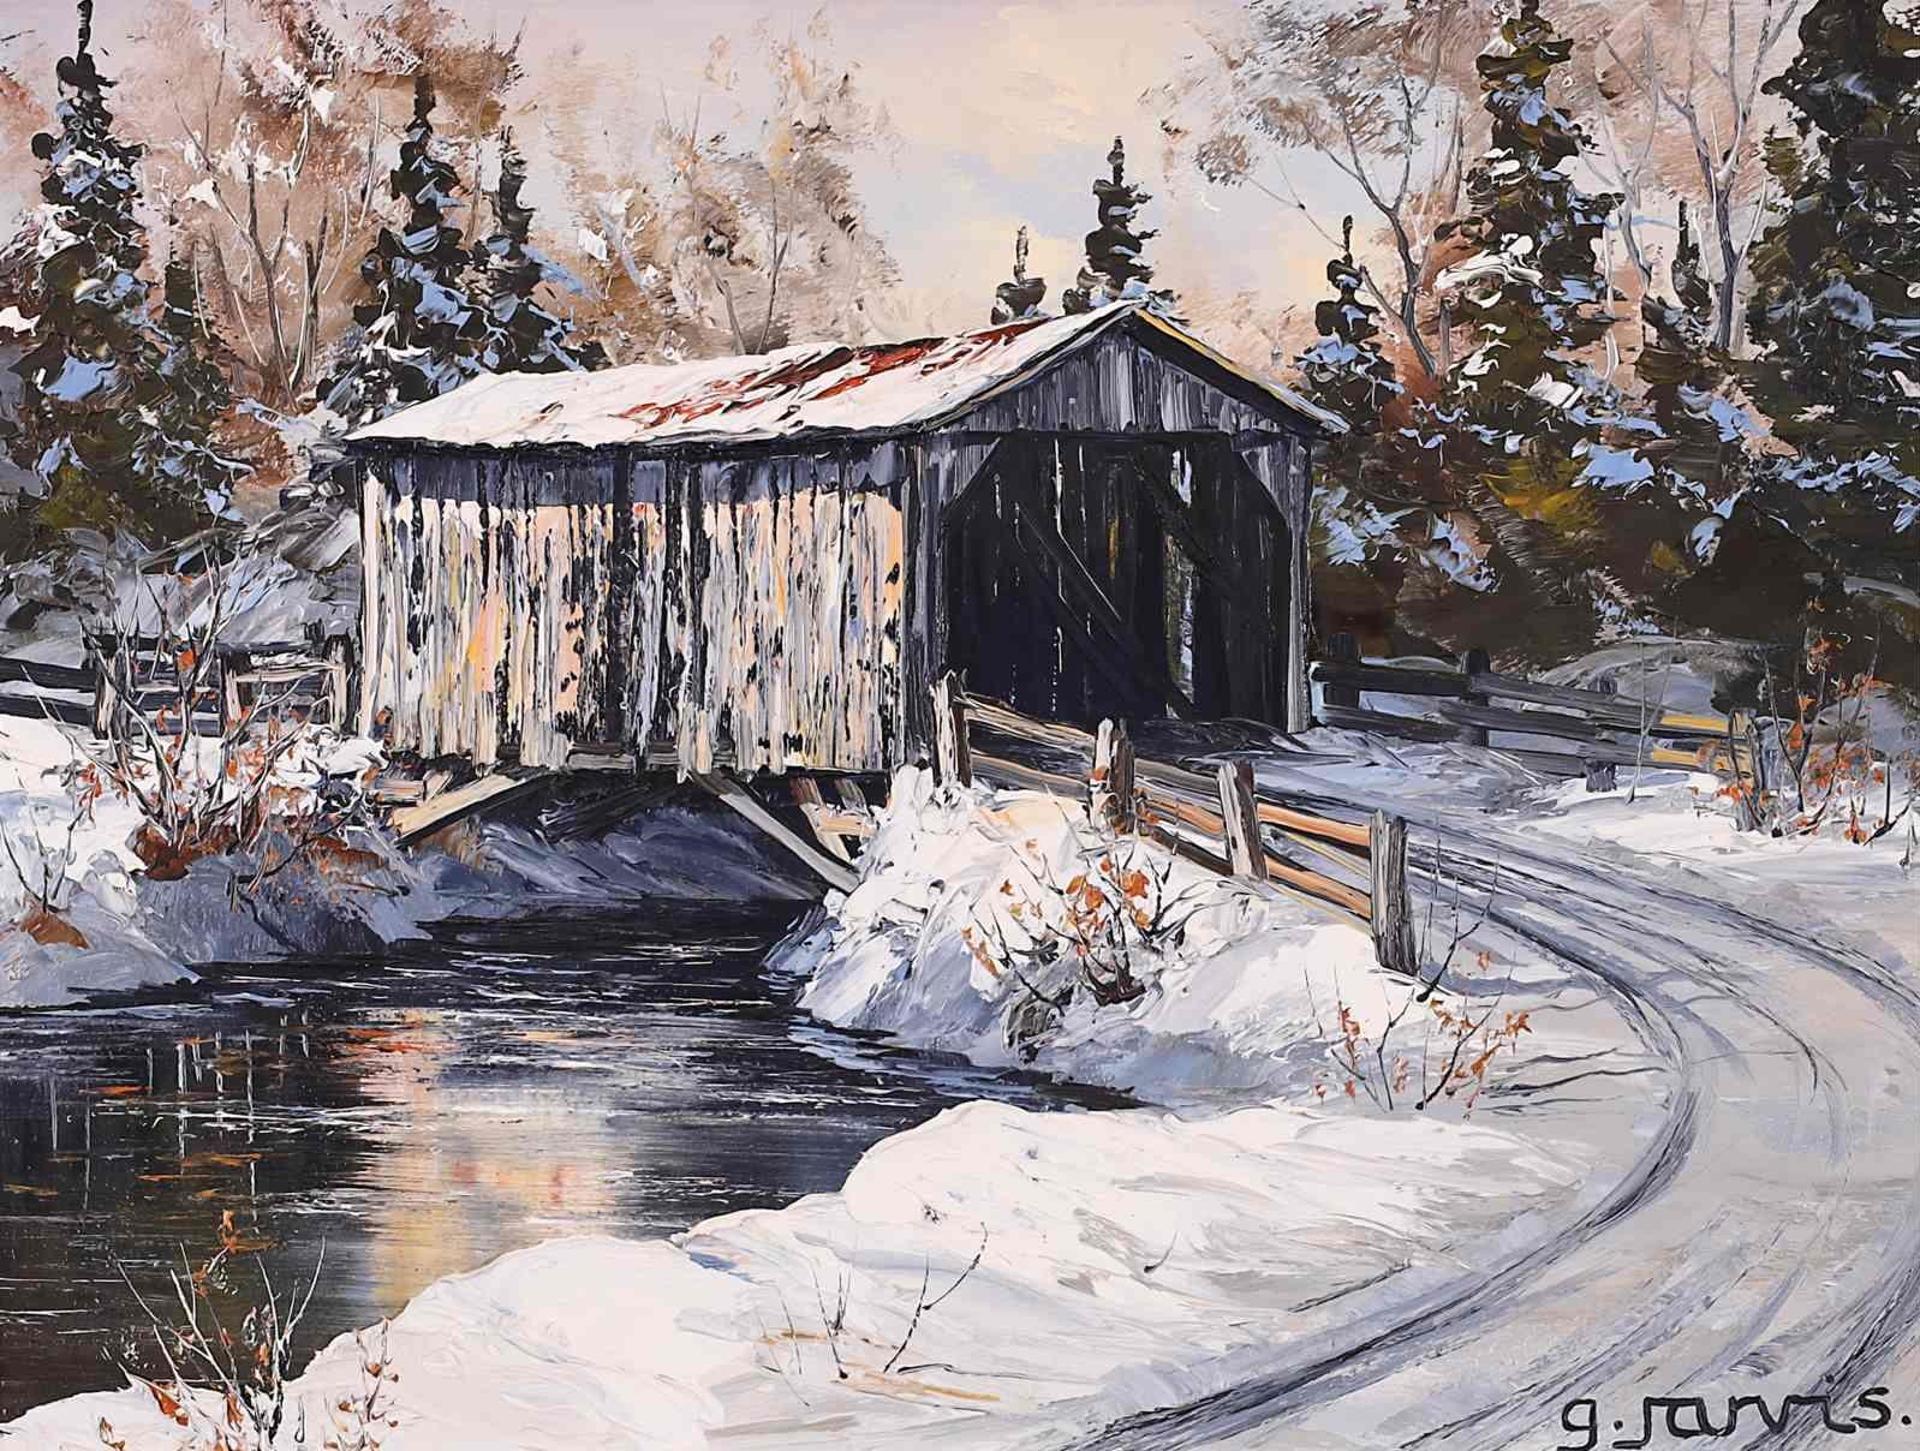 Georgia Jarvis (1944-1990) - Winter Bridge